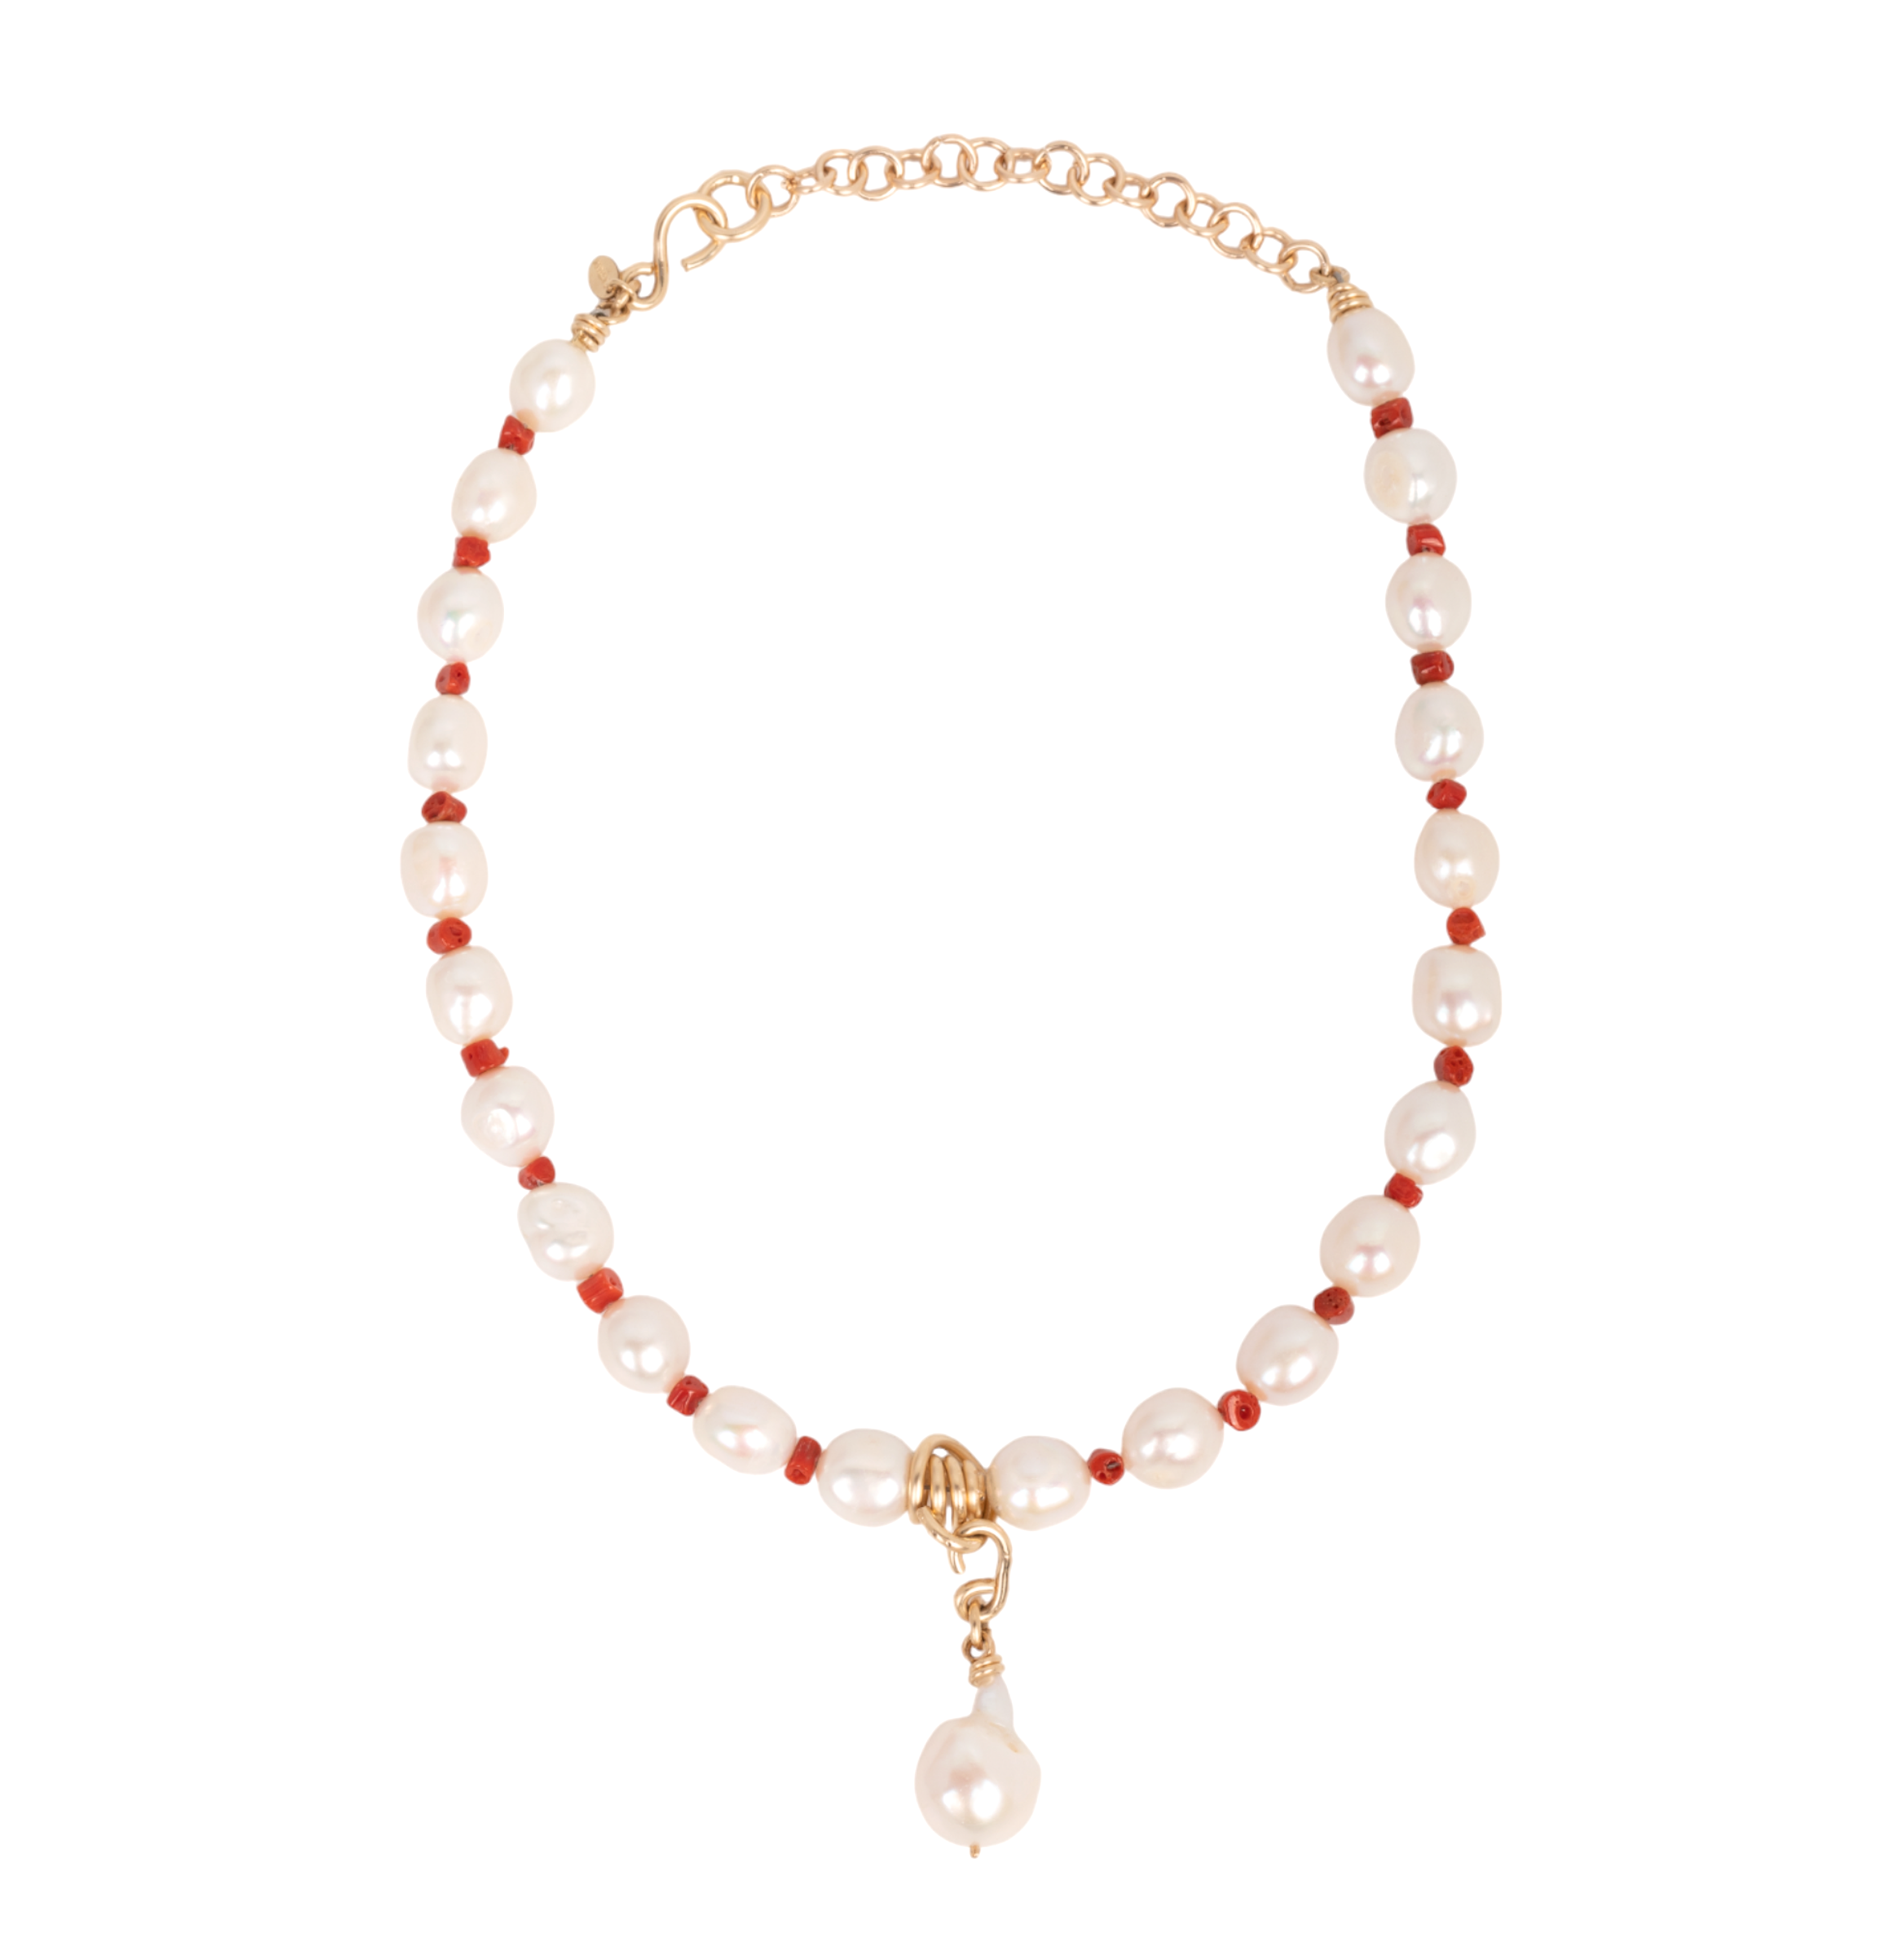 Marejada Necklace #1 - Pearl & Red Coral Necklaces TARBAY   